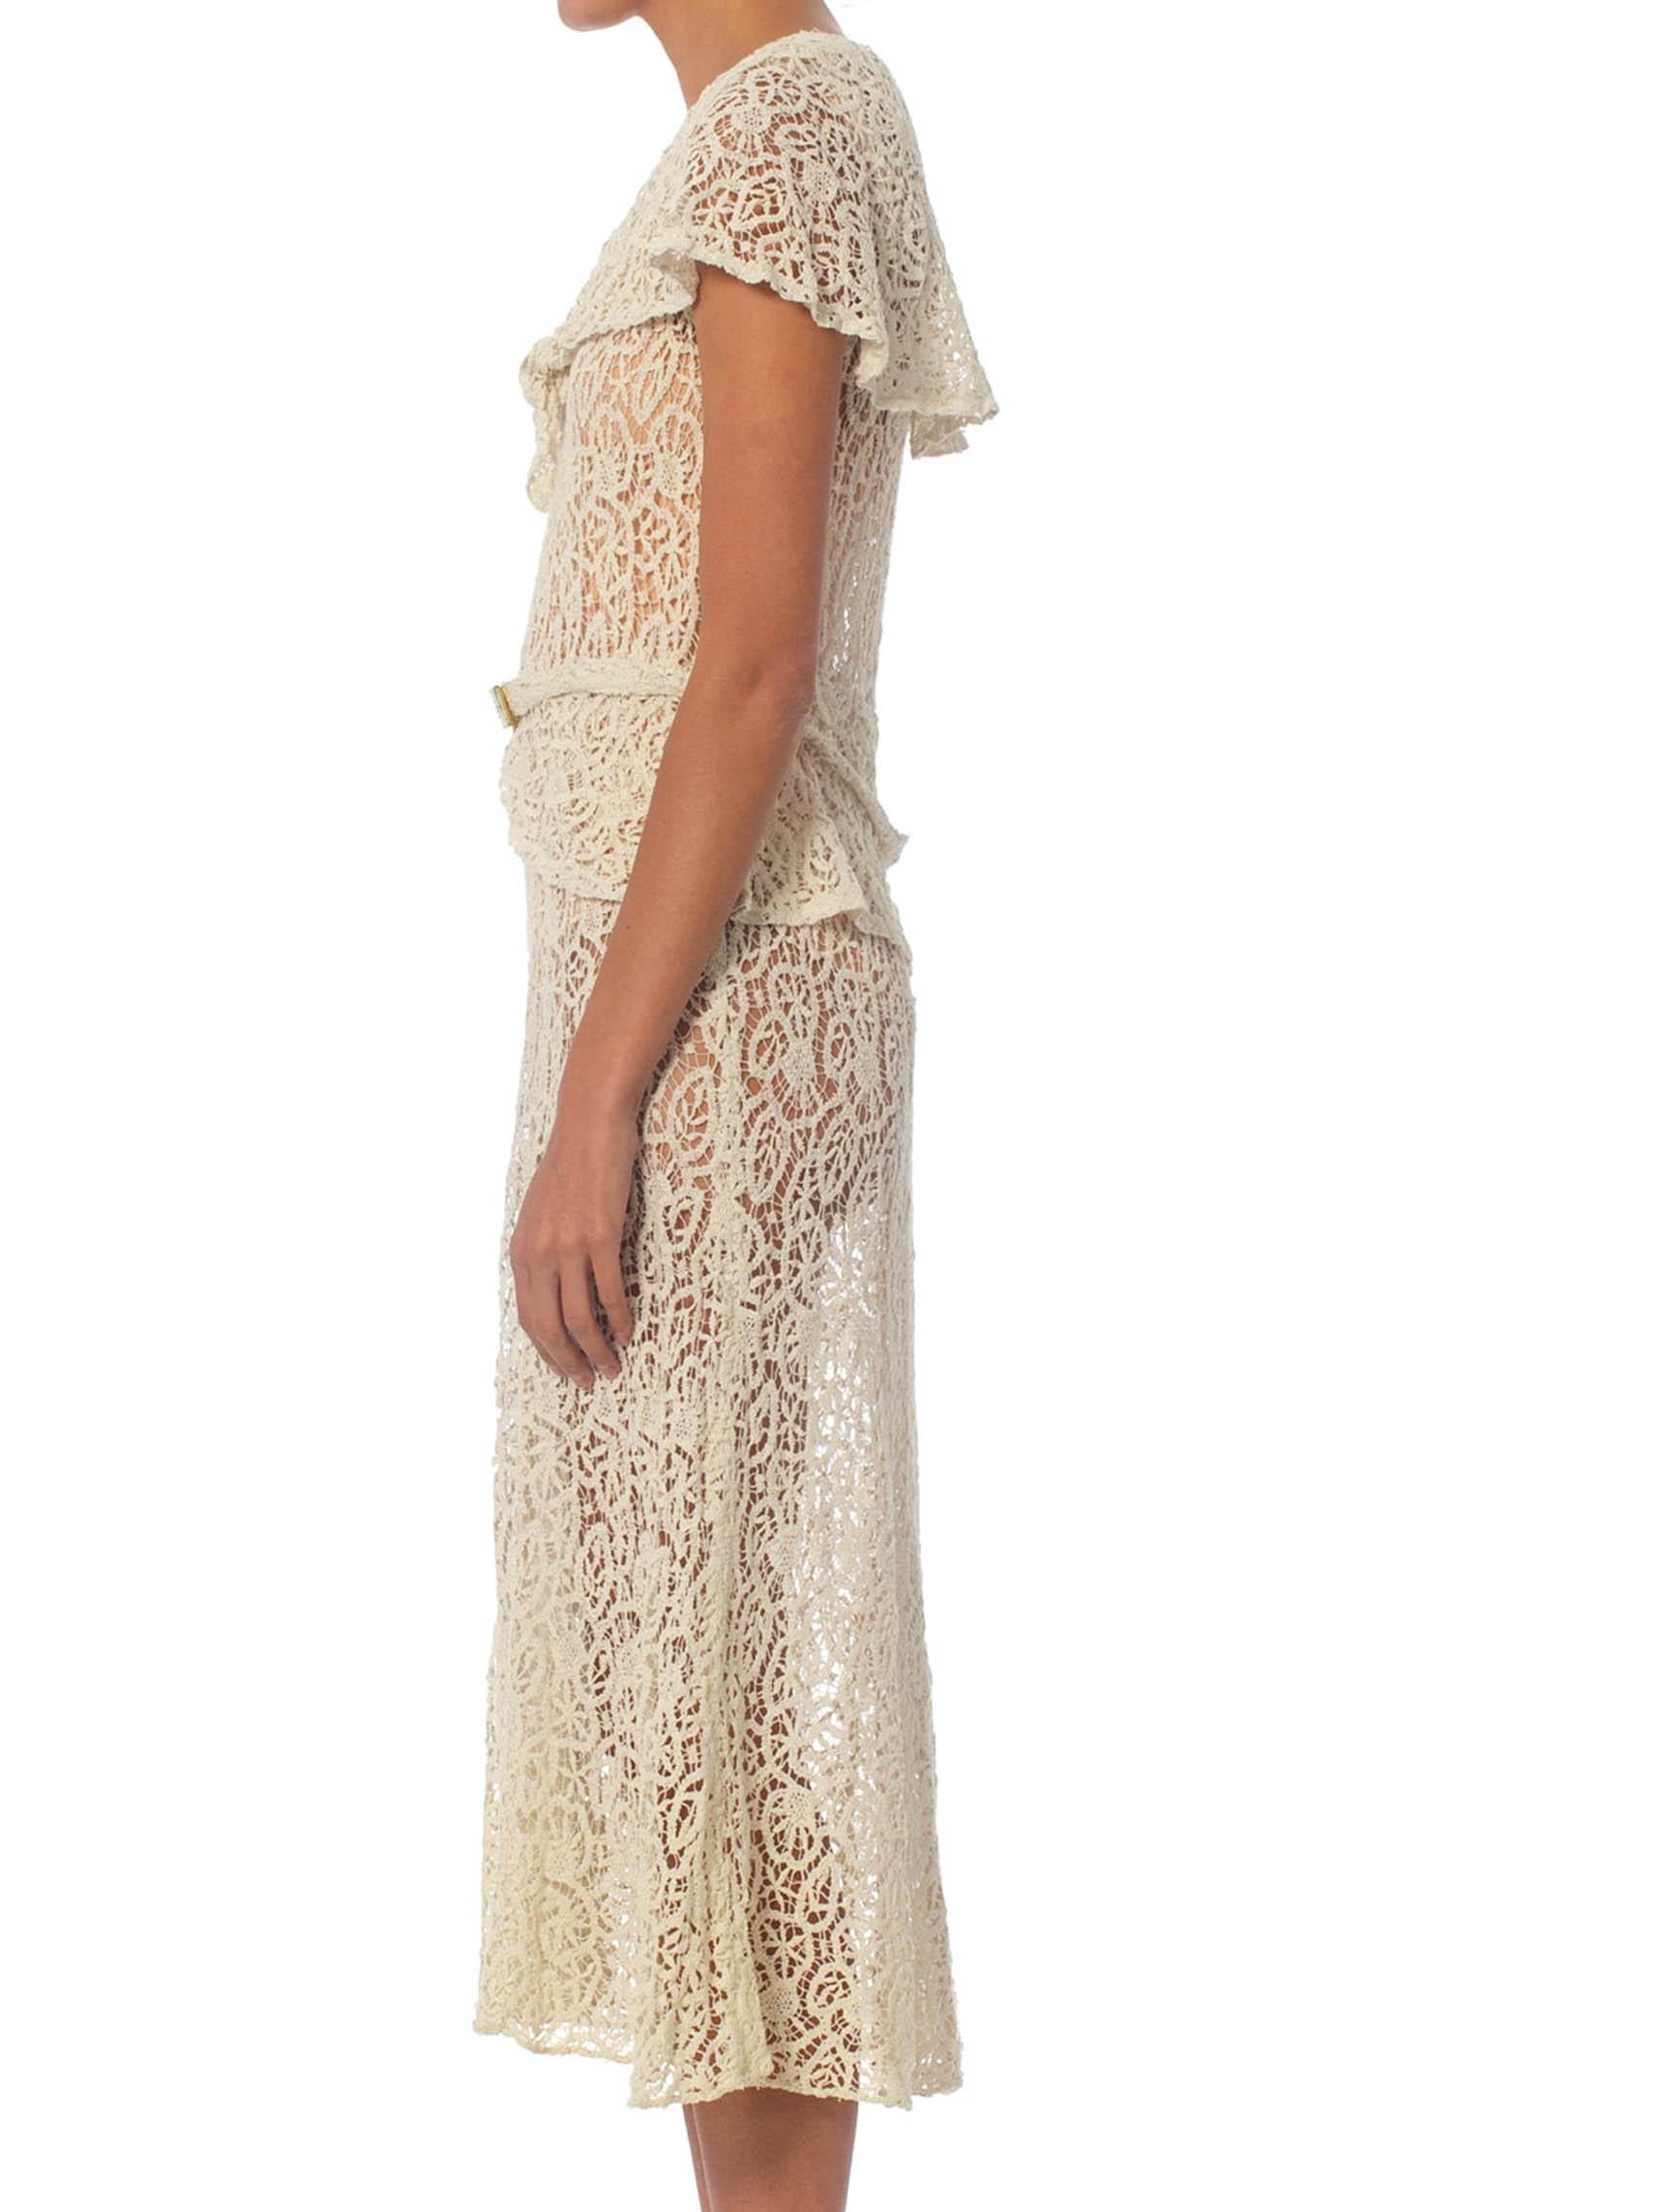 1930S White Bias Cut Cotton Lace Dress With Caplet Sleeves, Peplum & Art-Deco Belt